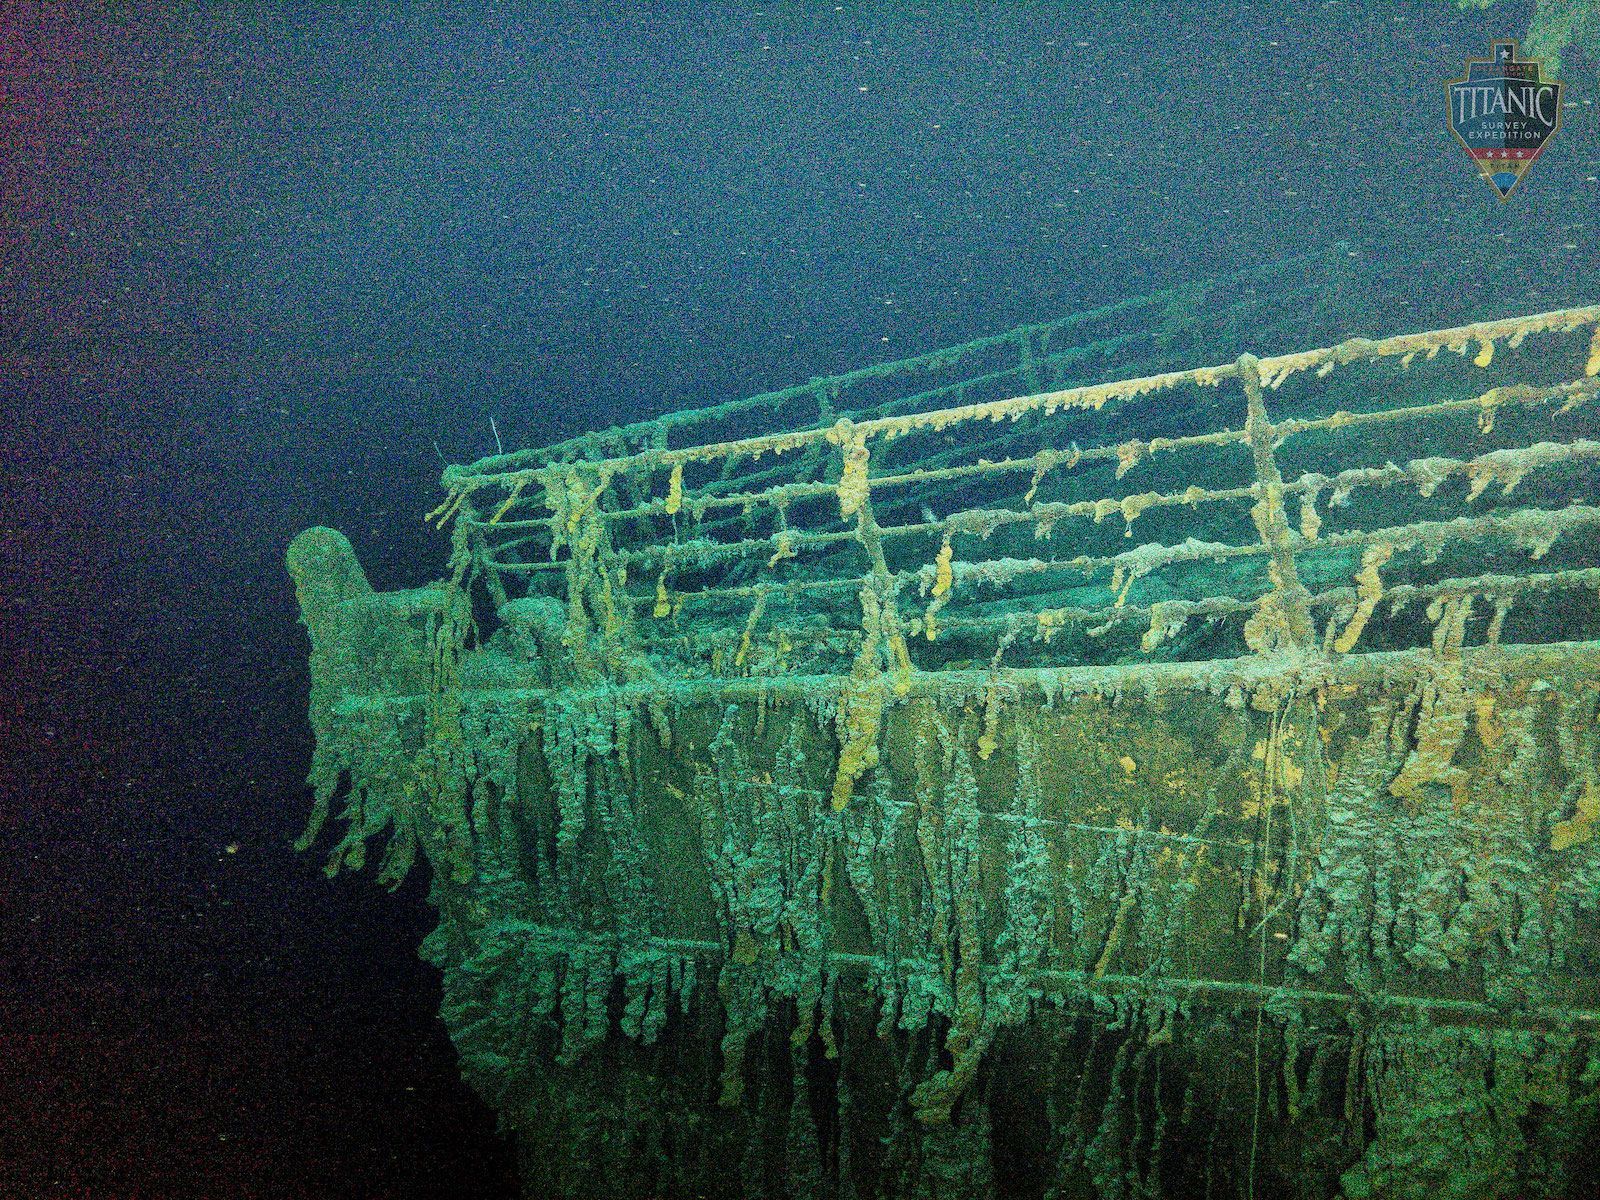 inside the titanic underwater bodies